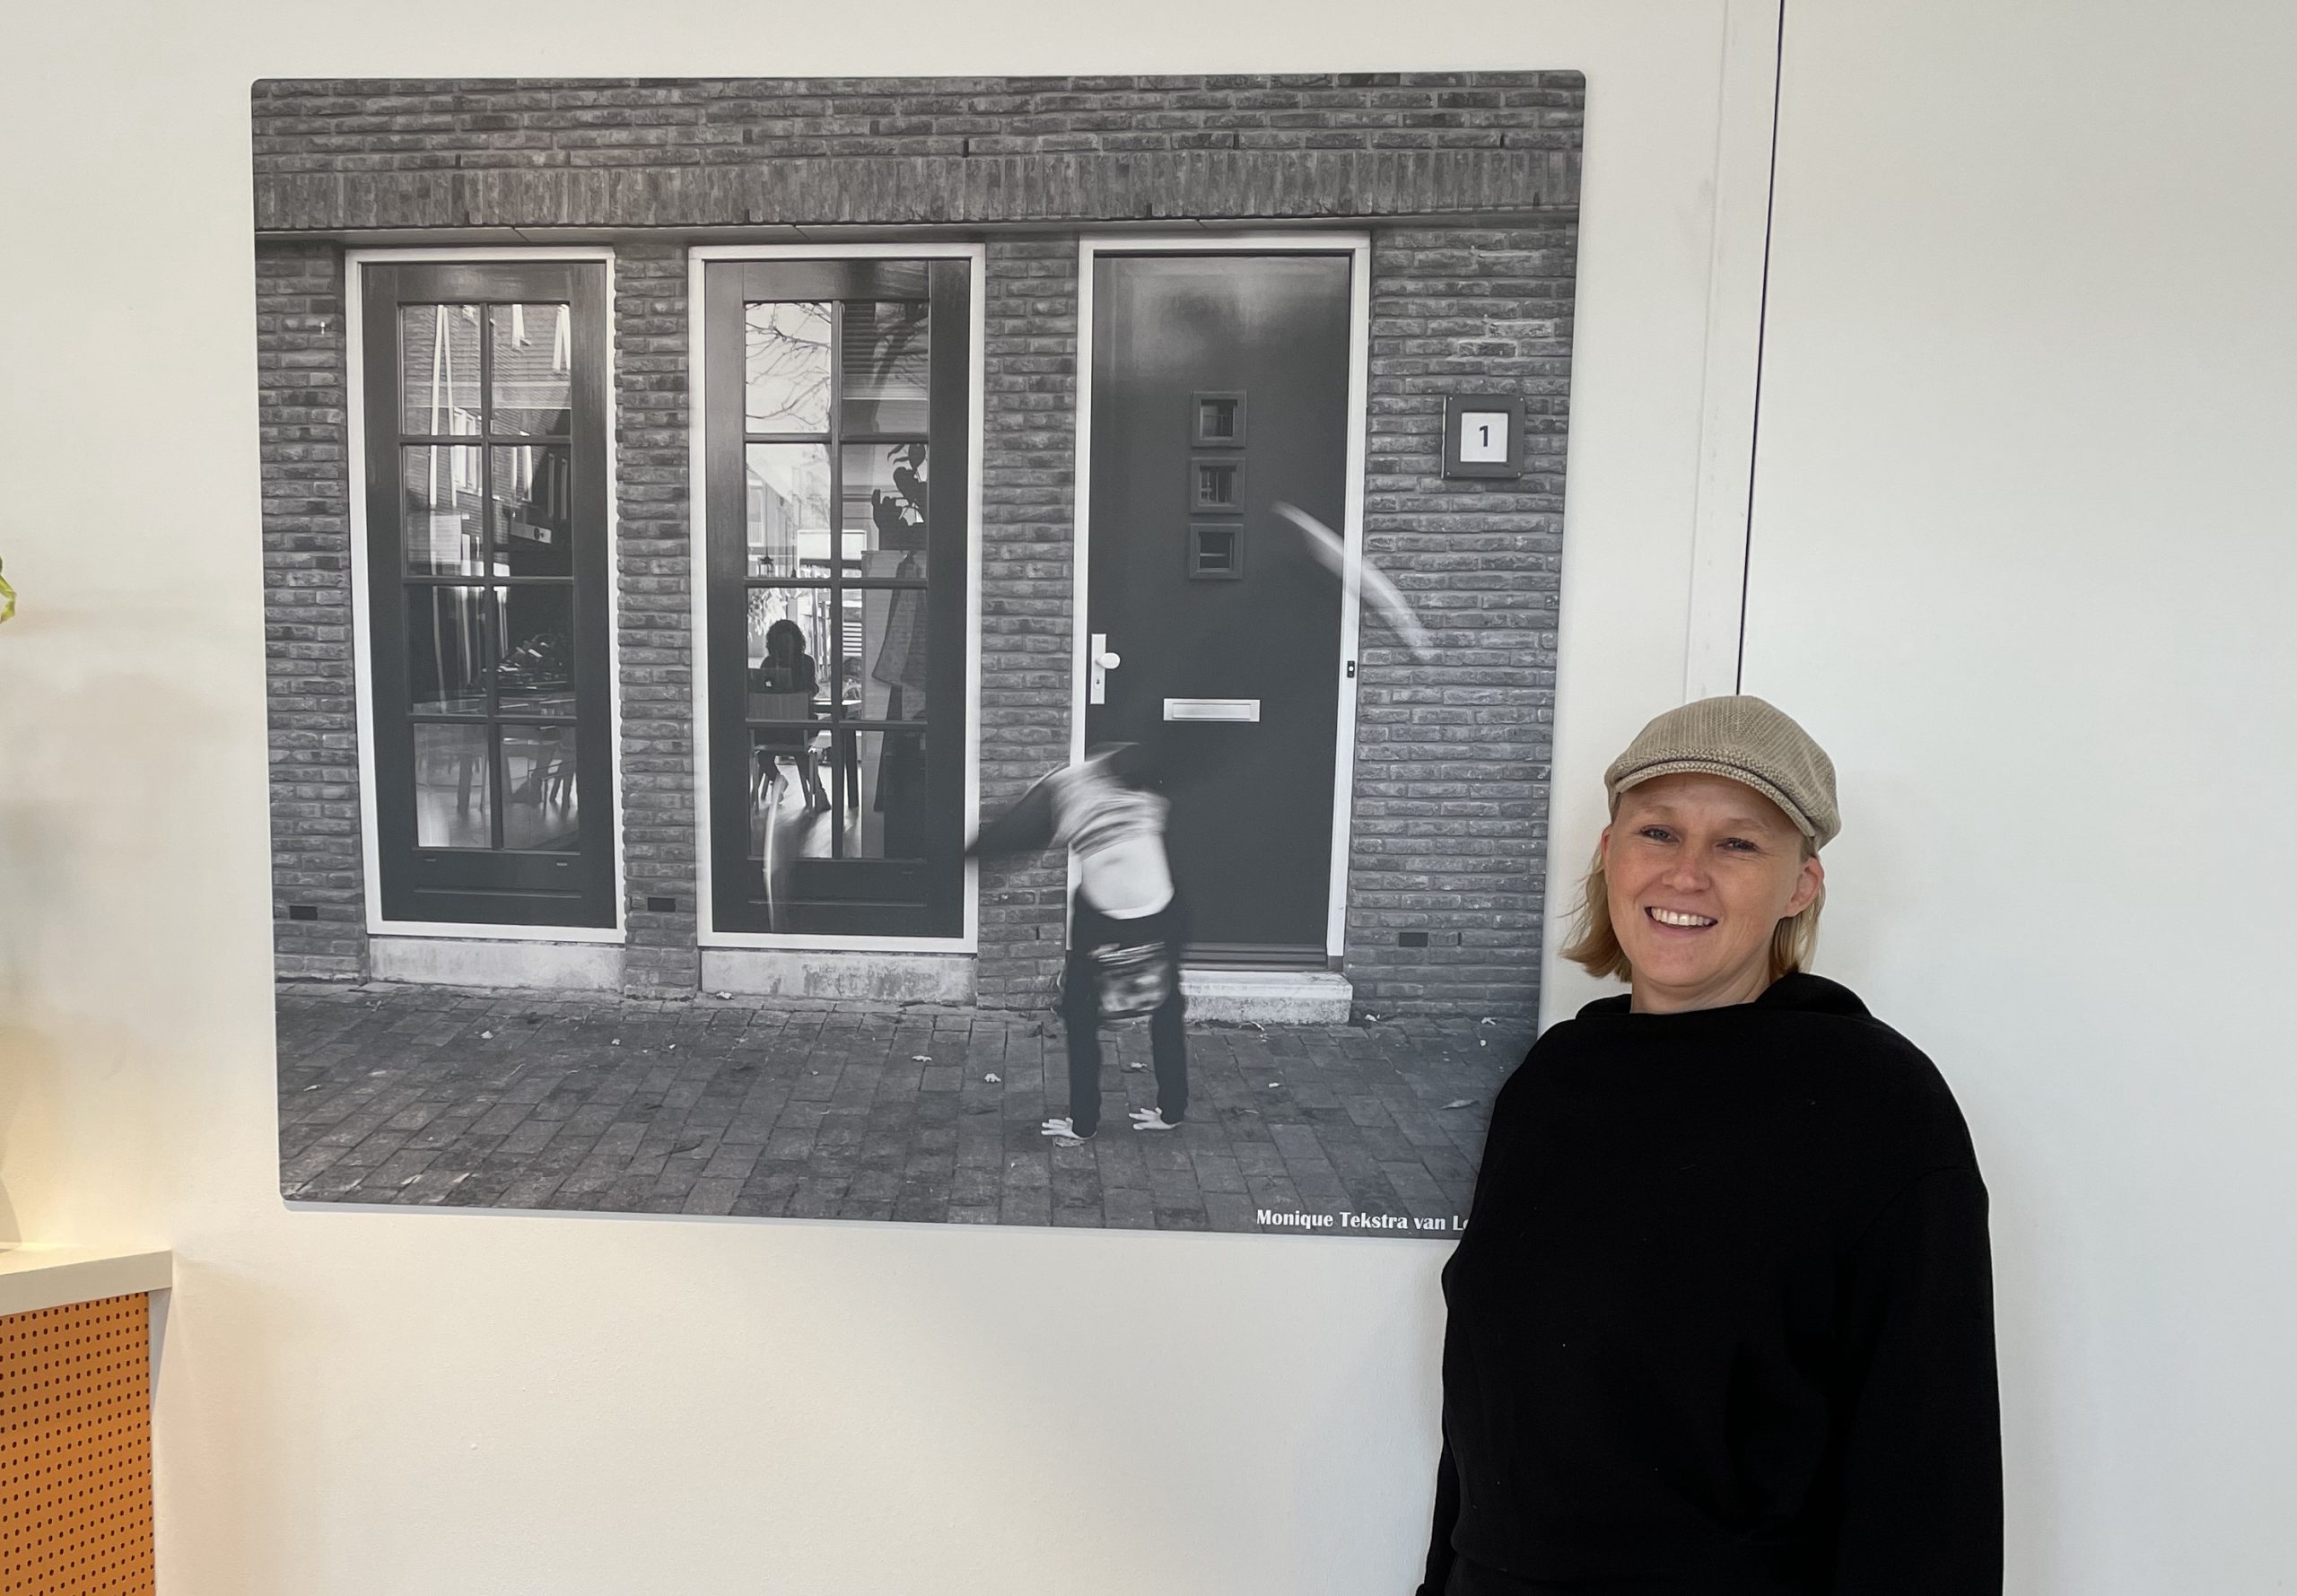 Monique with My street photo in Bibliotheek Eemland